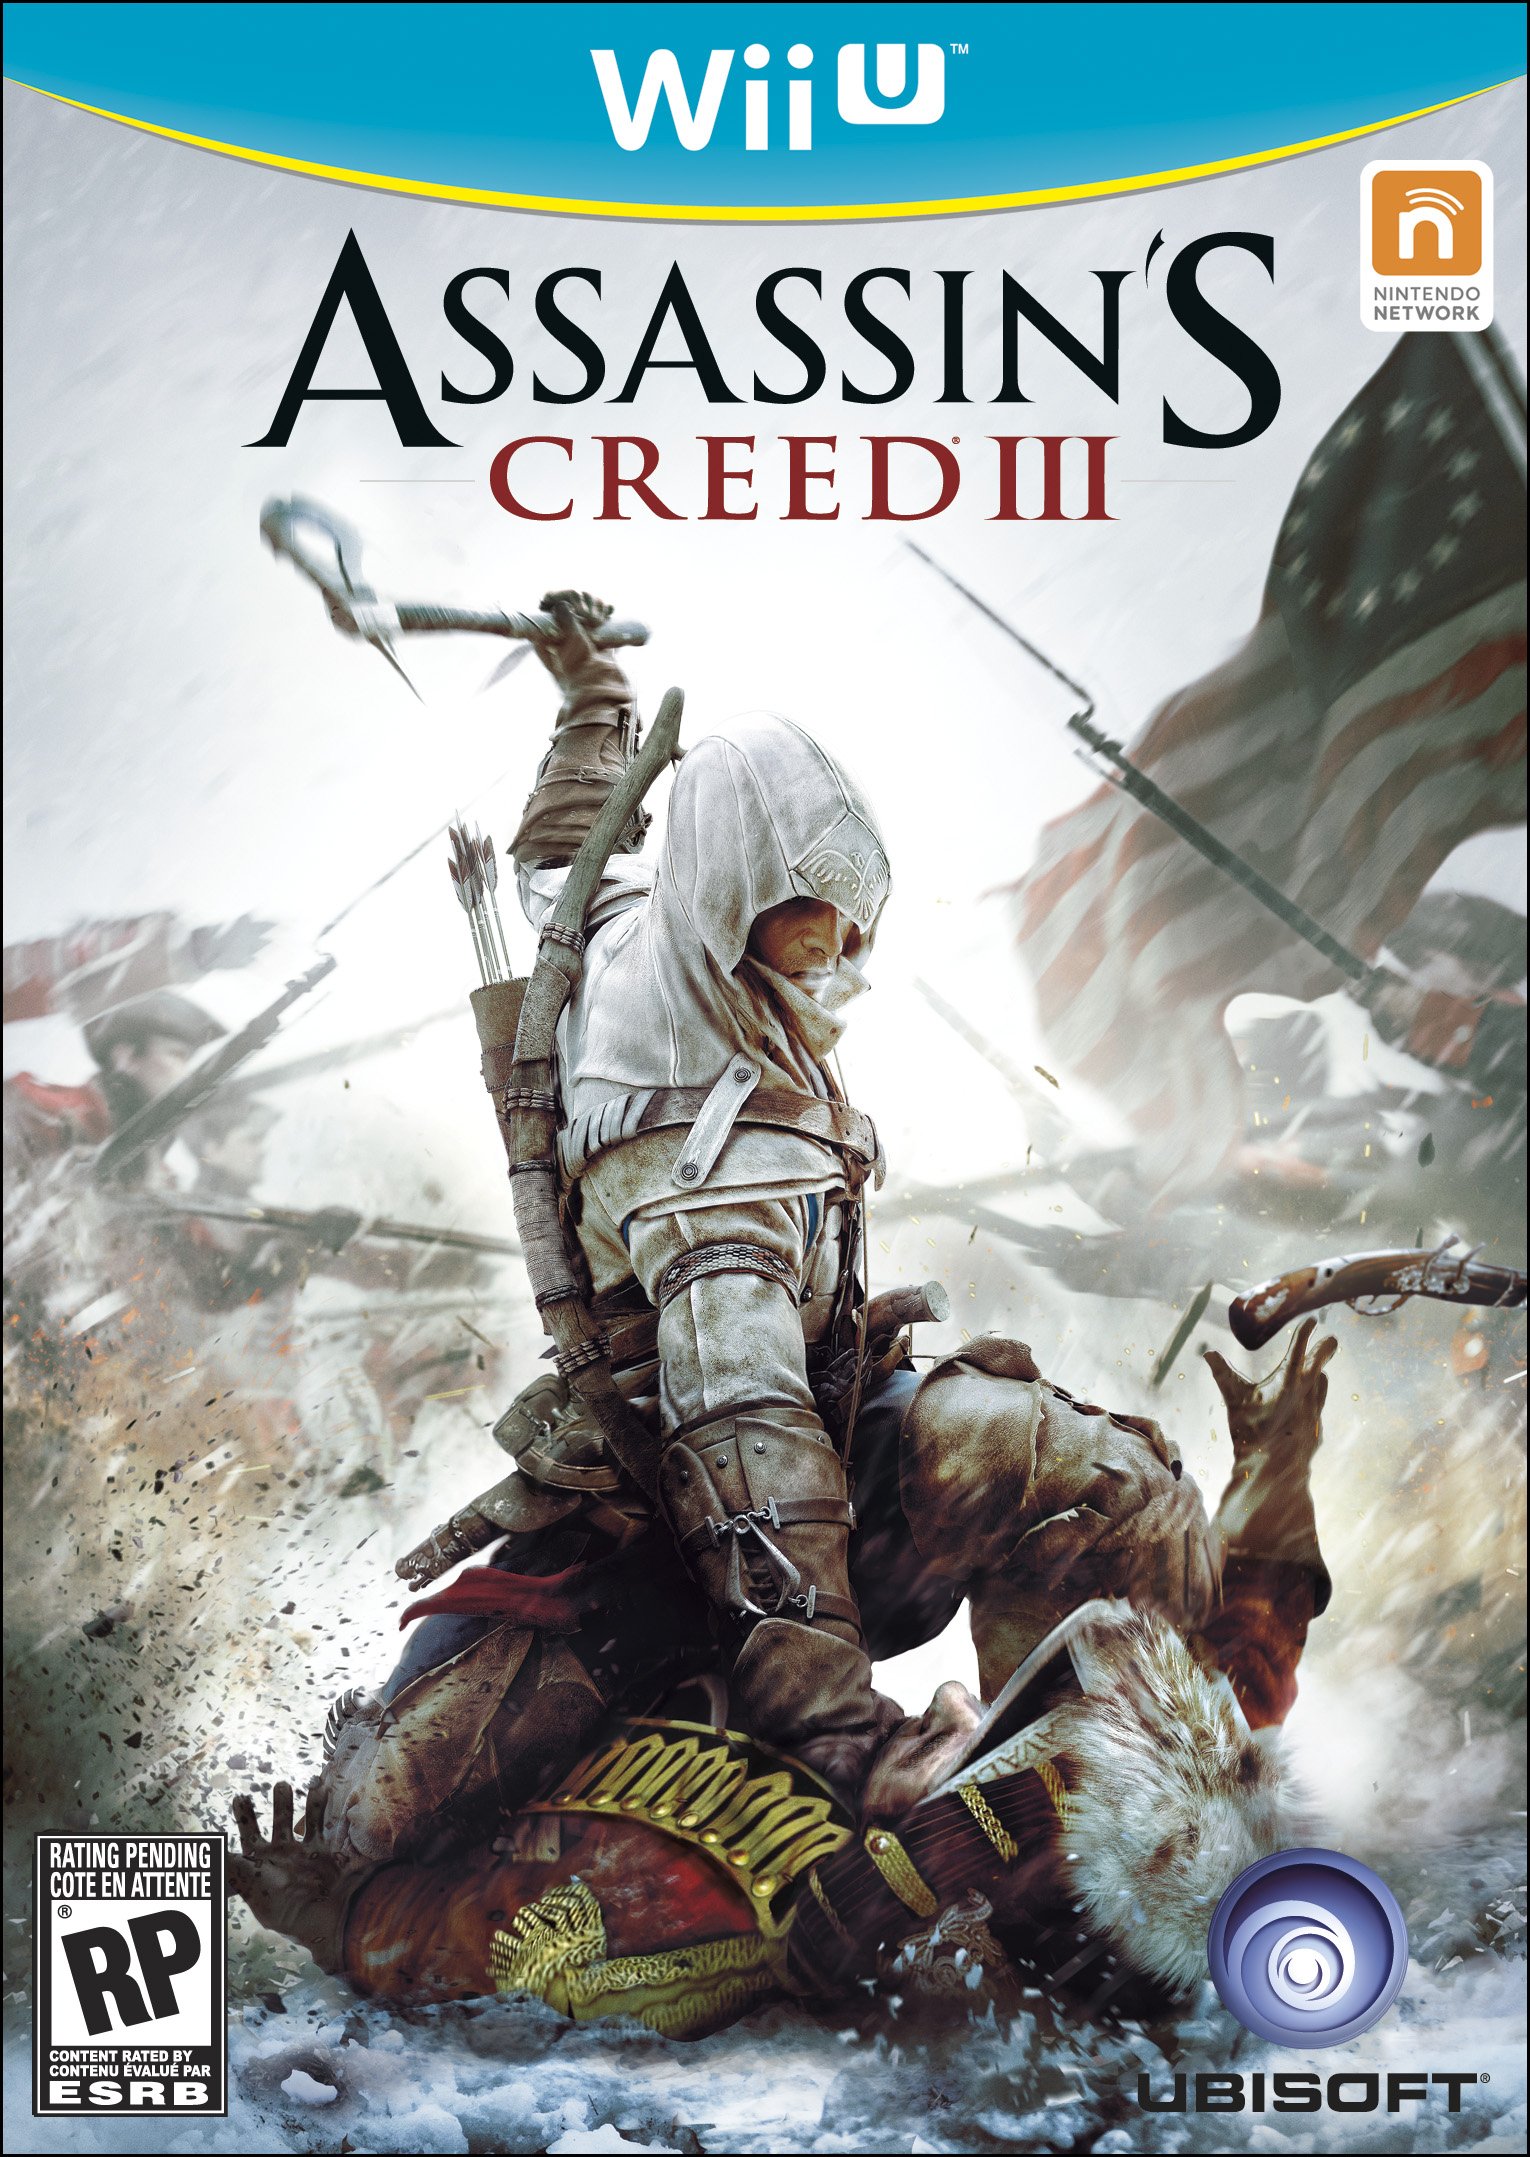 Wii U Assassin's Creed III Box Art Leak